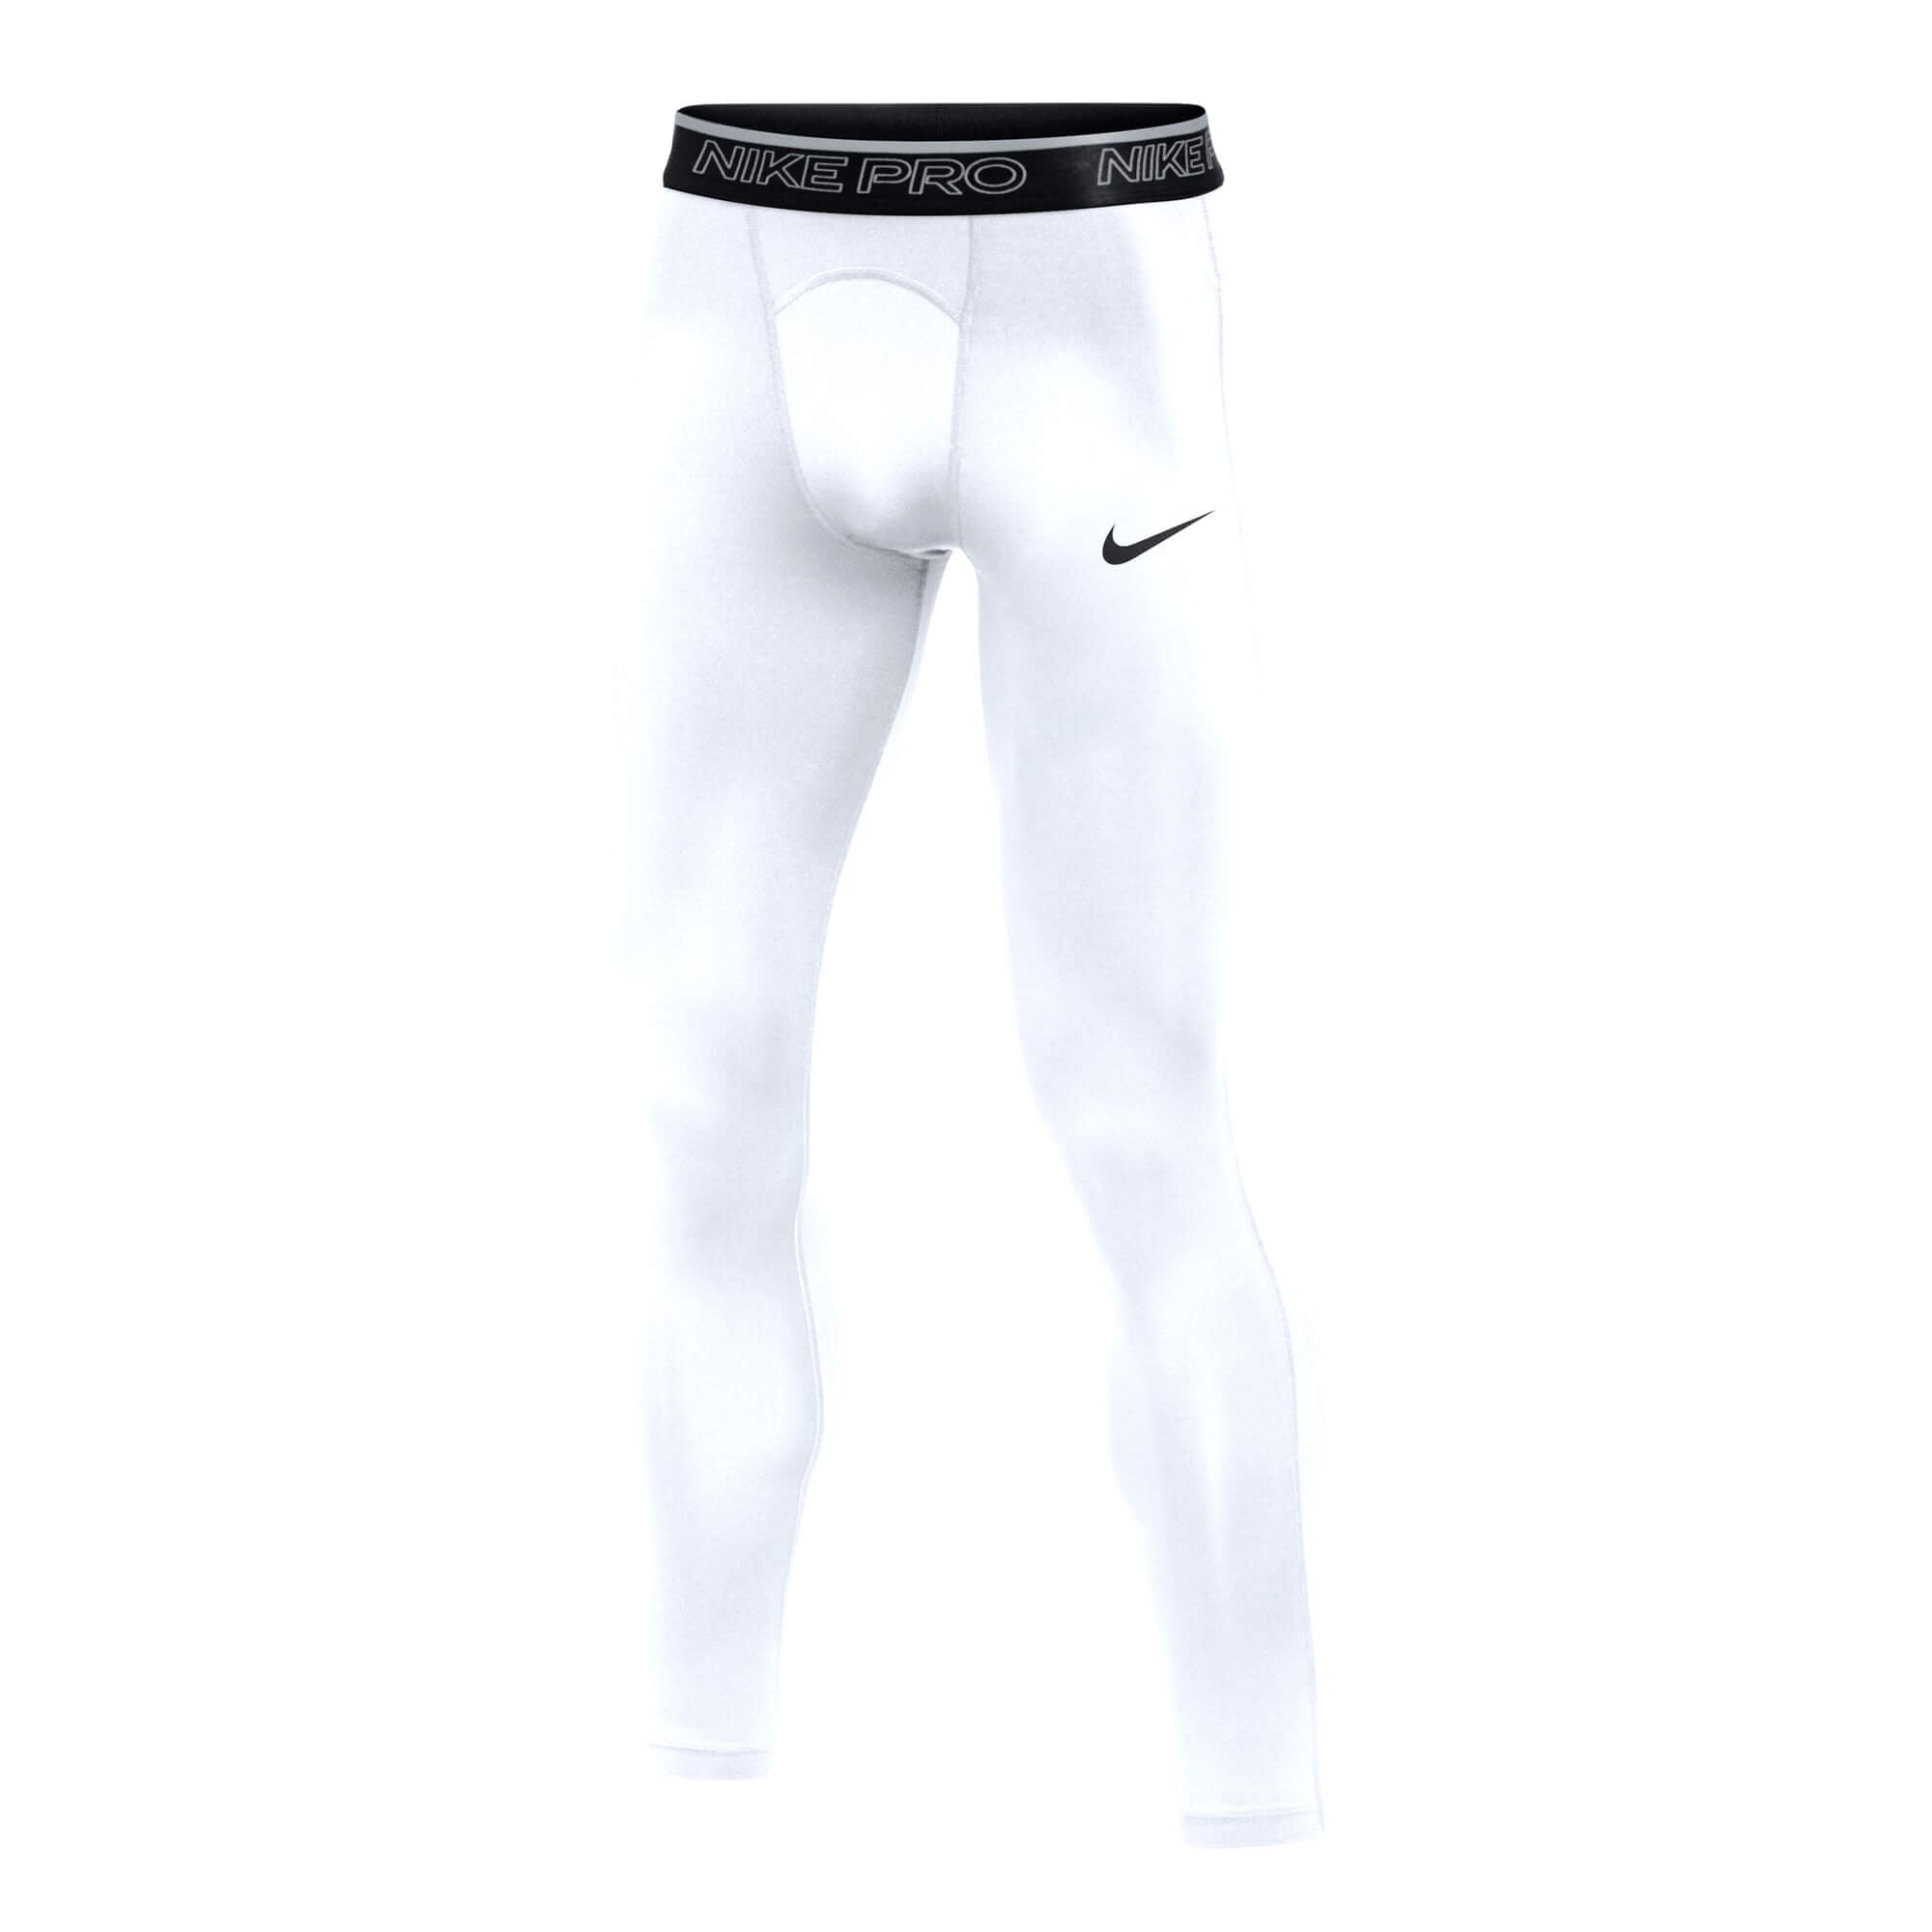 NEW Nike Kids Boy's Pro White Tights (Little Kids/Big Kids) Size (XL) -  X-Large | eBay